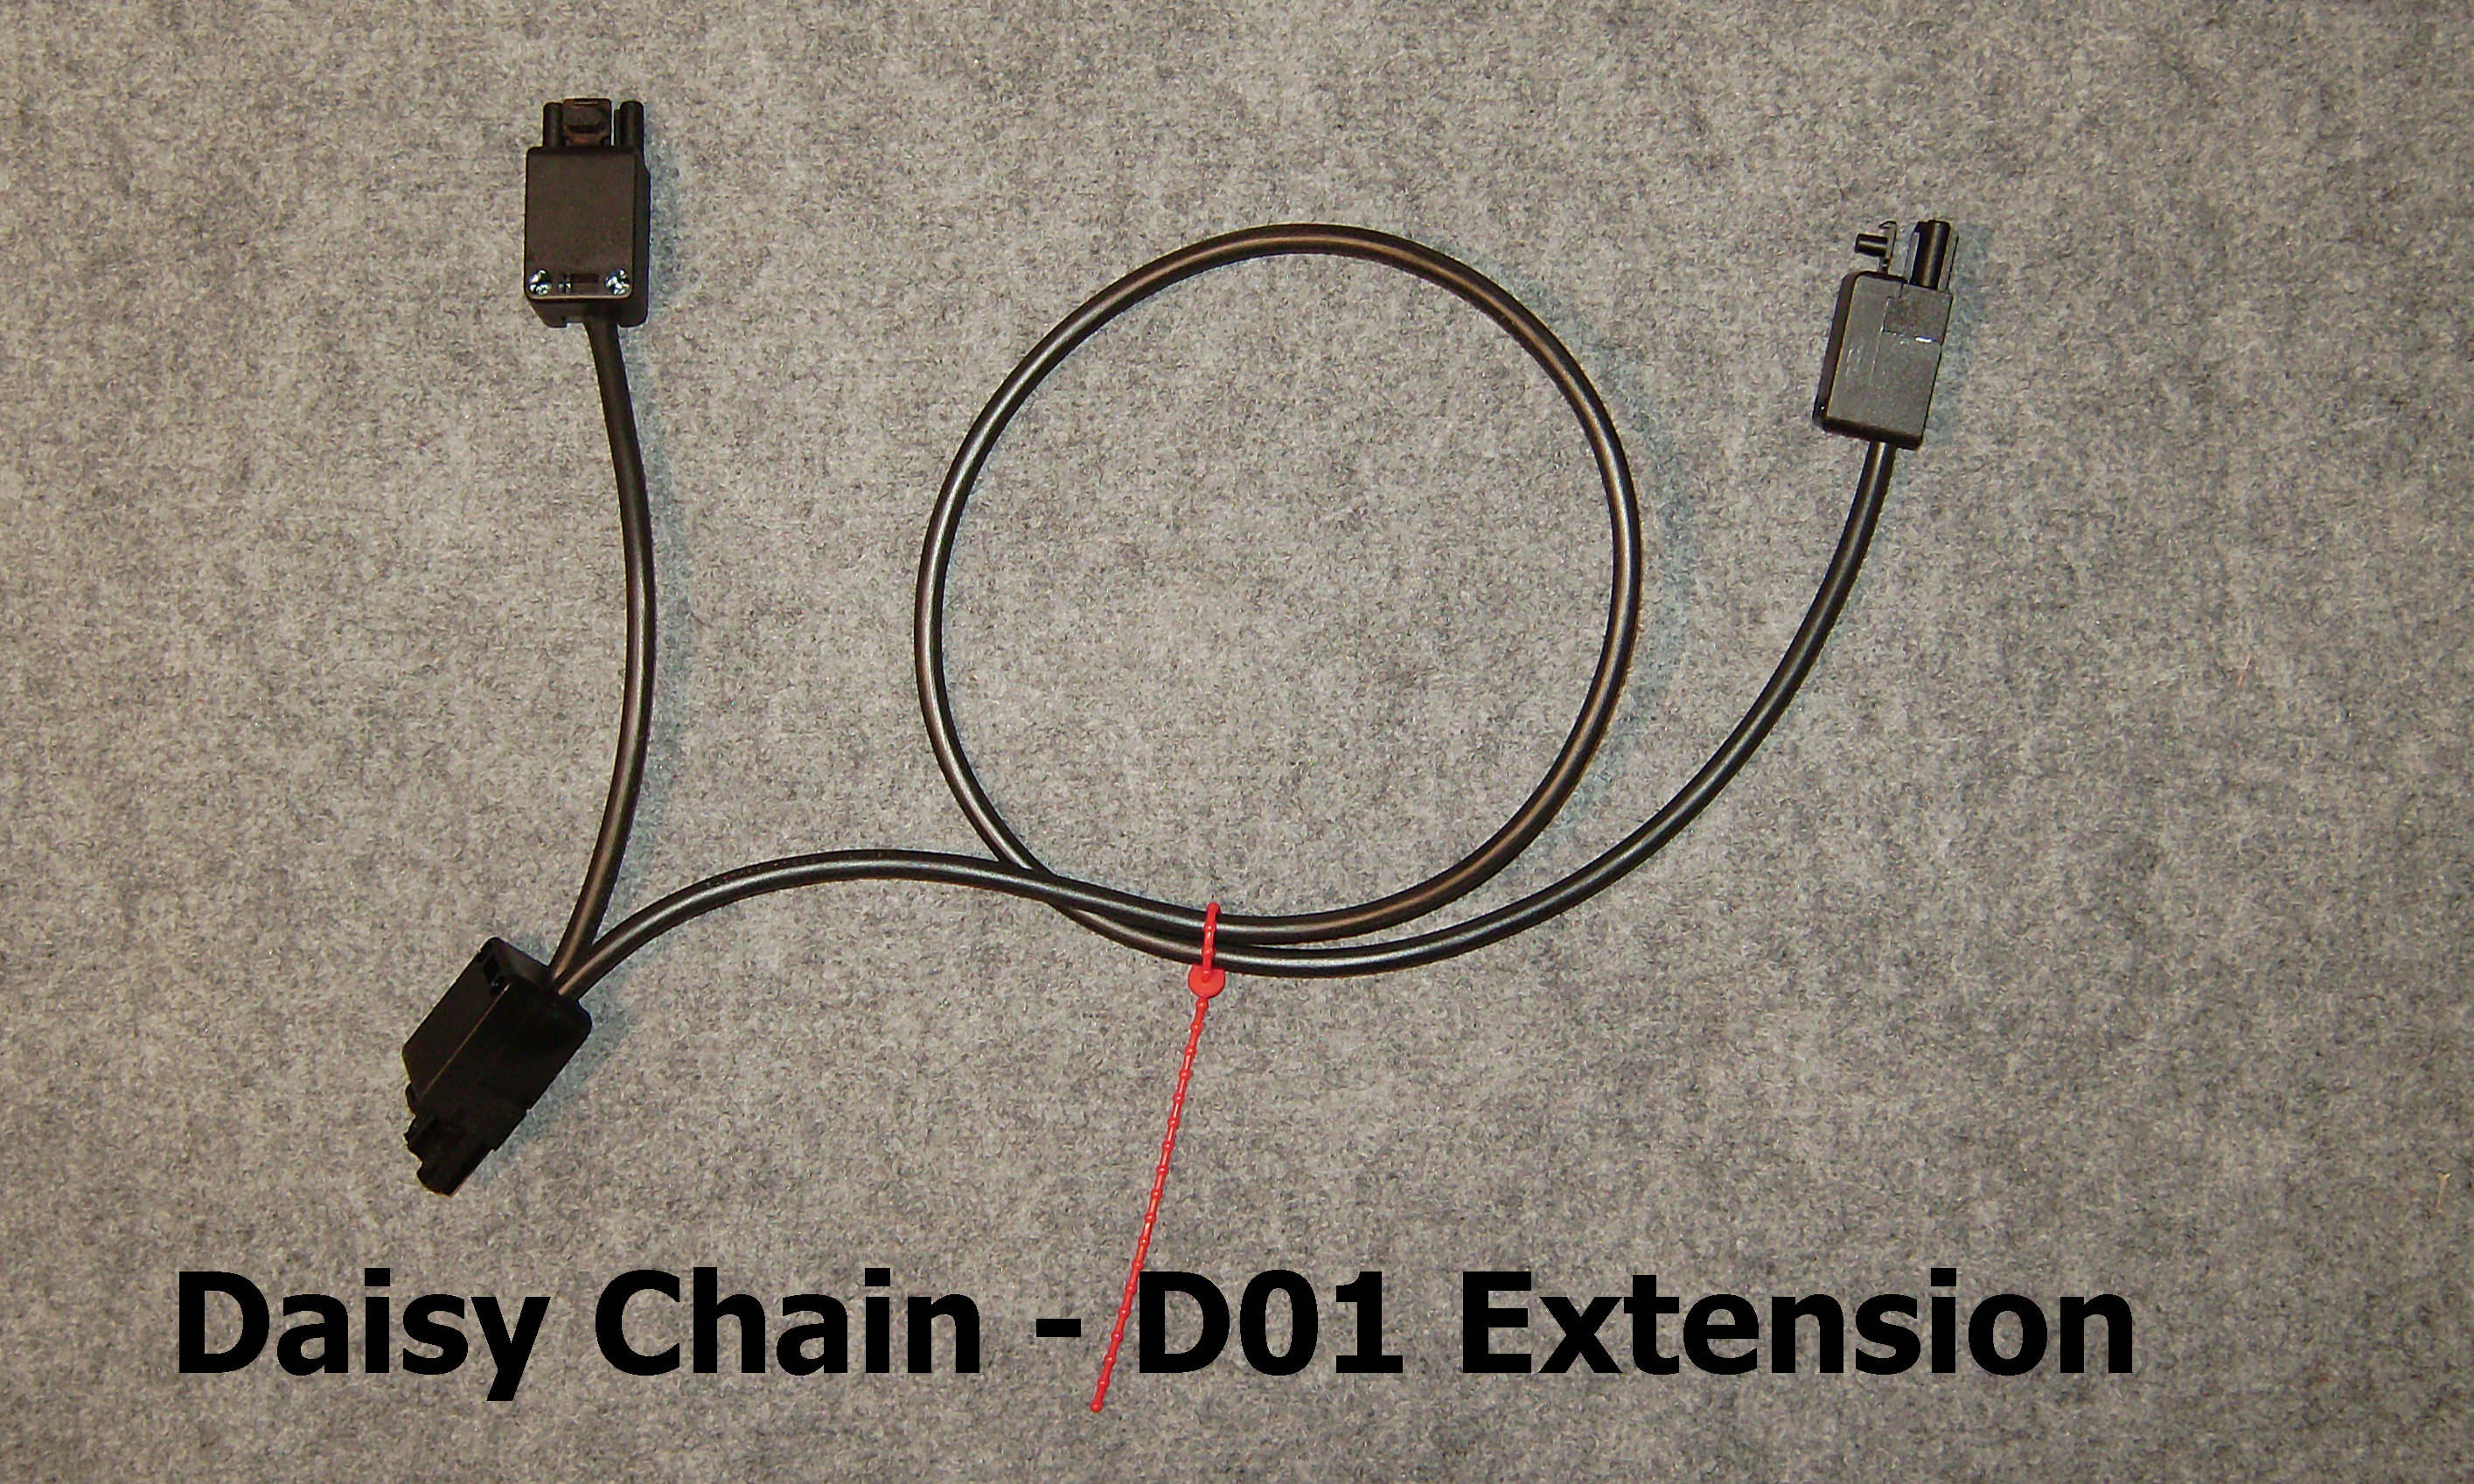 Daisy Chain System